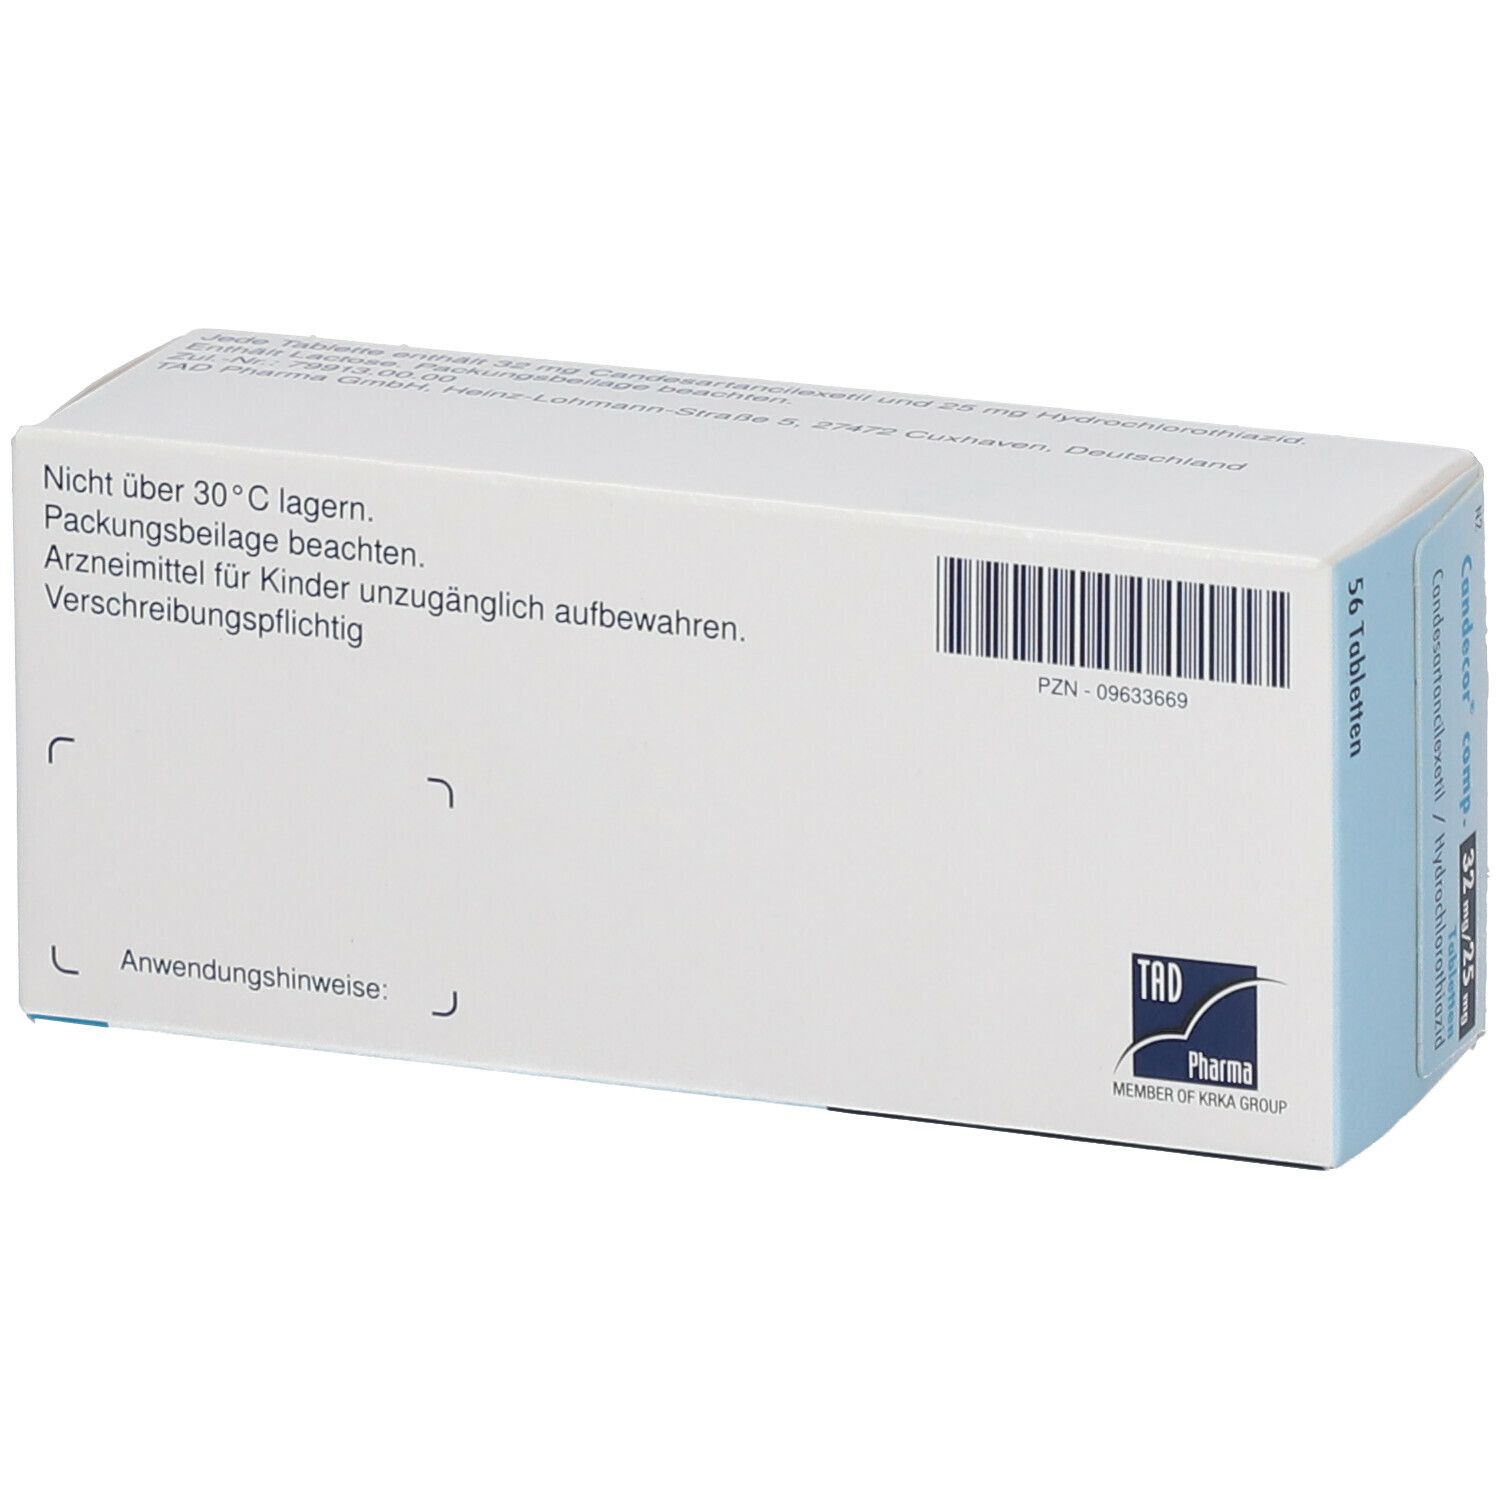 Candecor® comp. 32 mg/25 mg